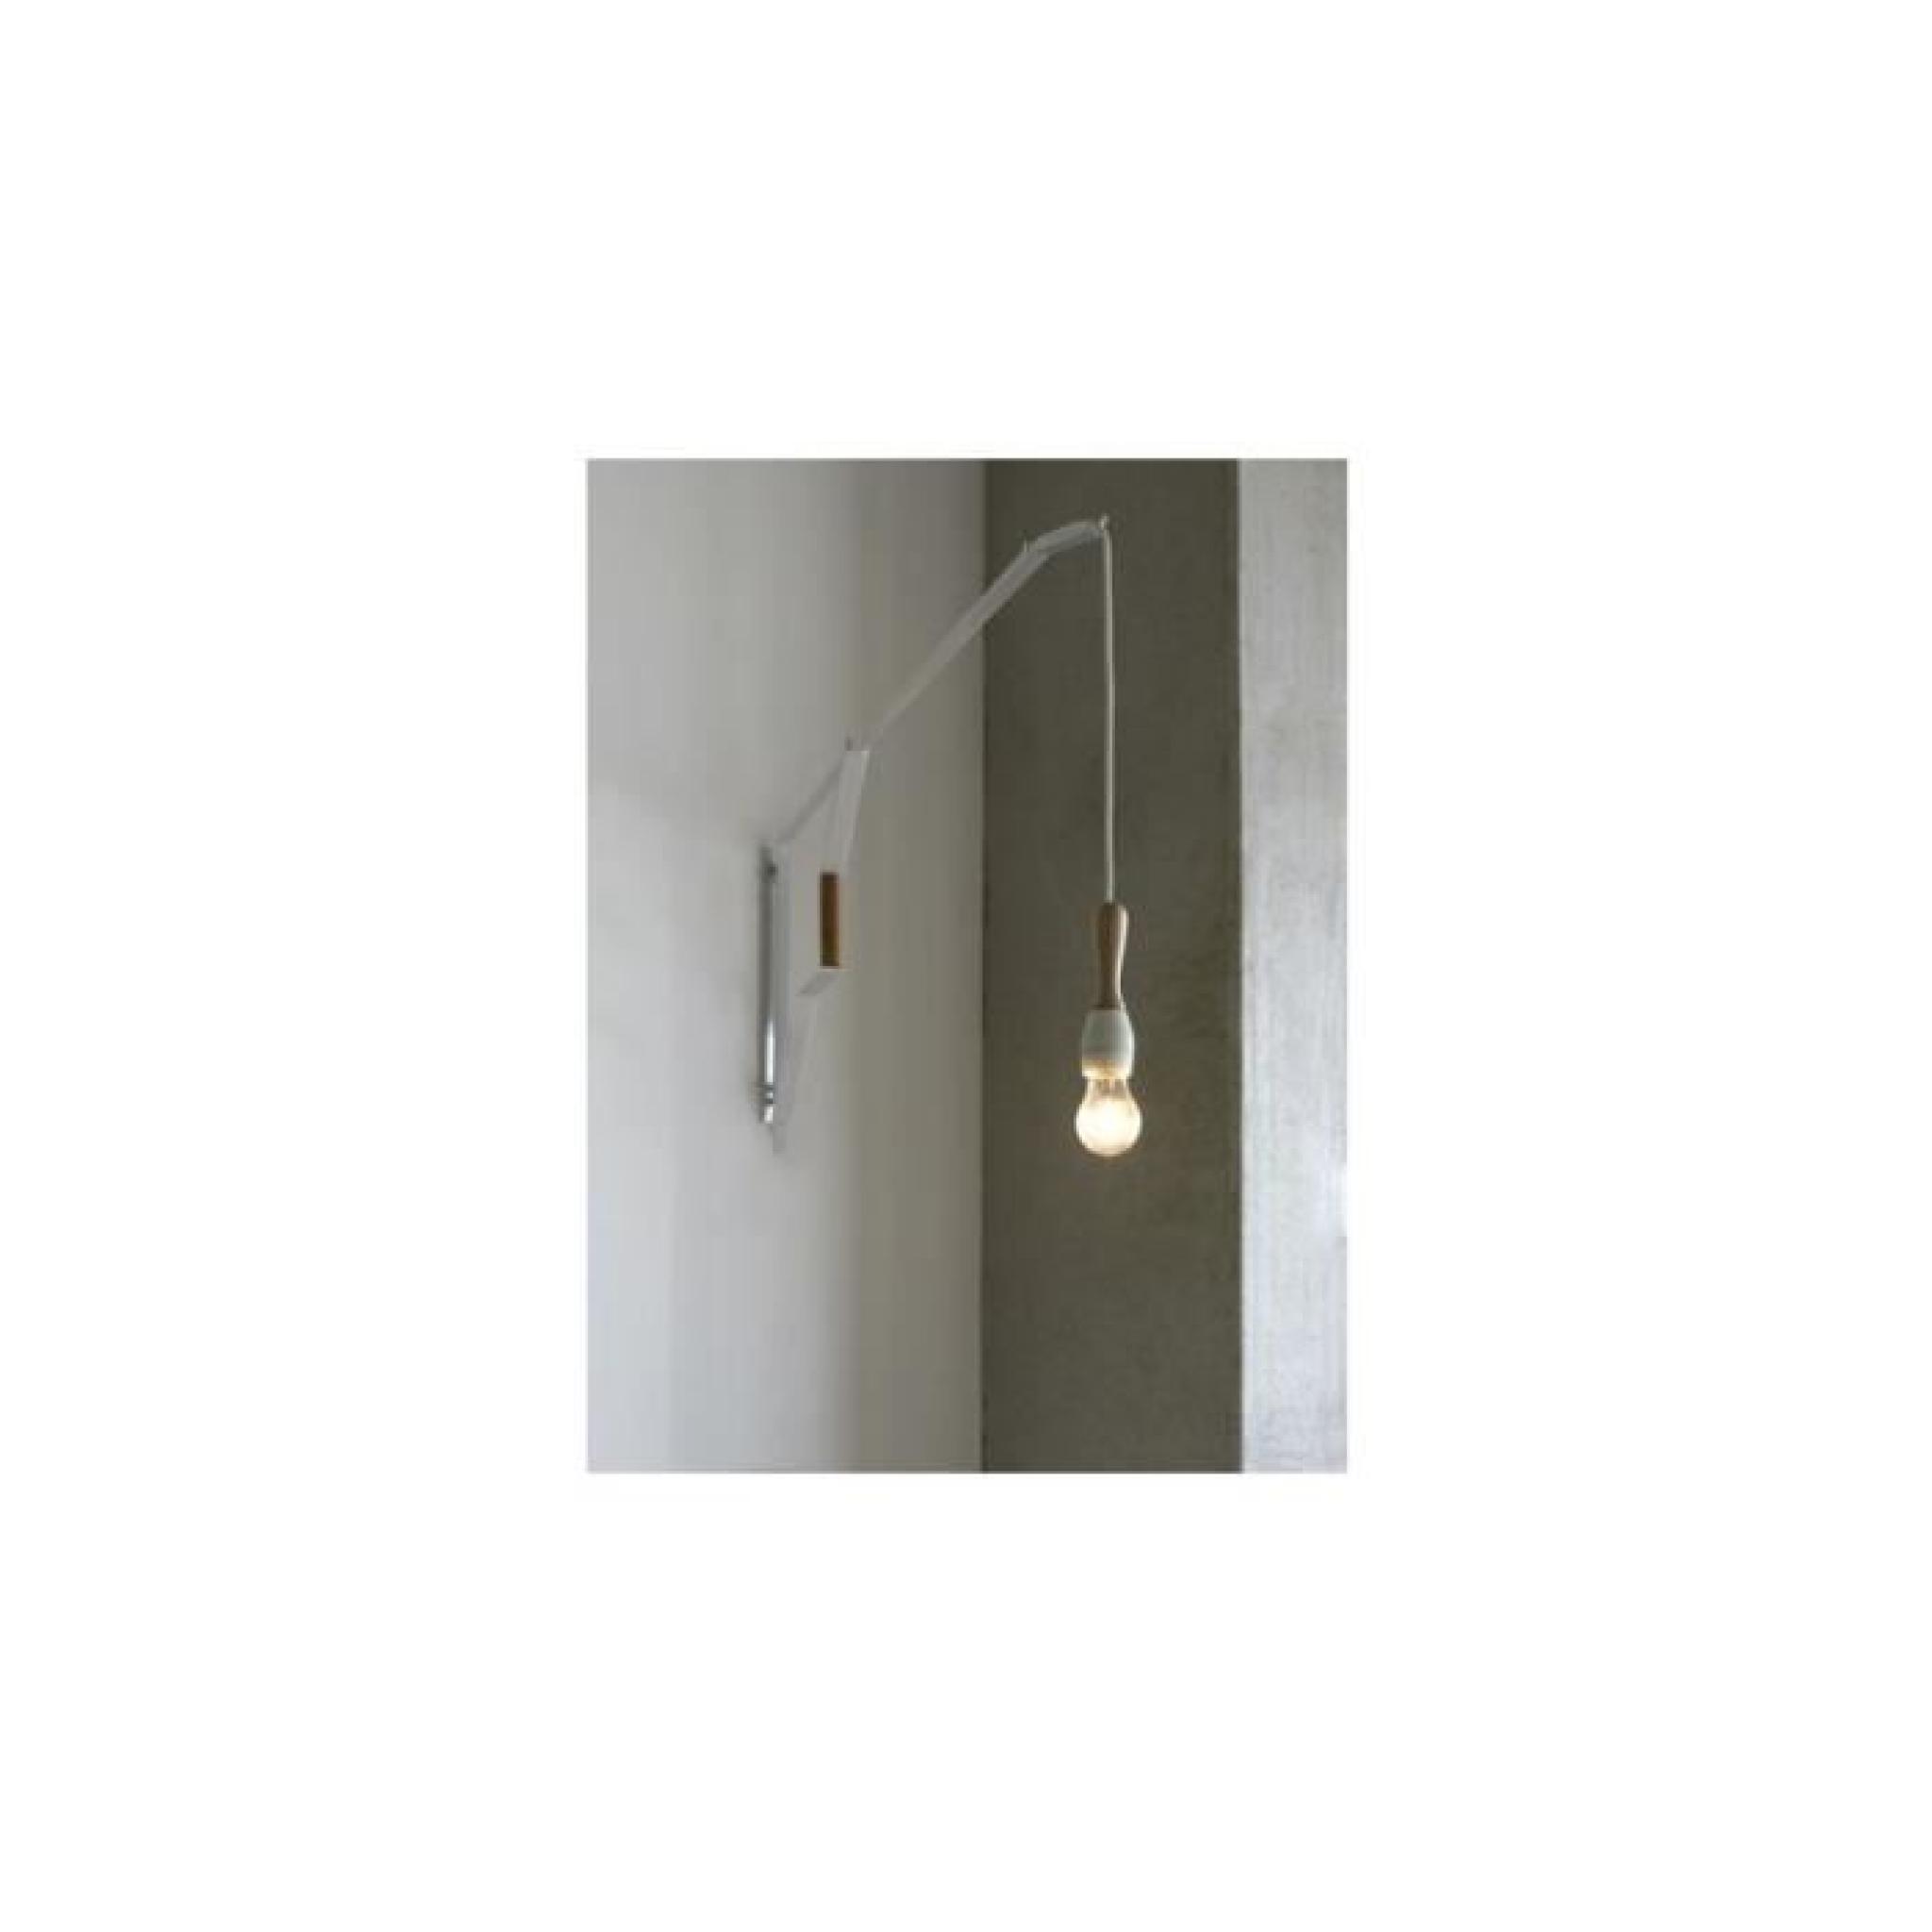 Applique murale style studio design lampe ampoule